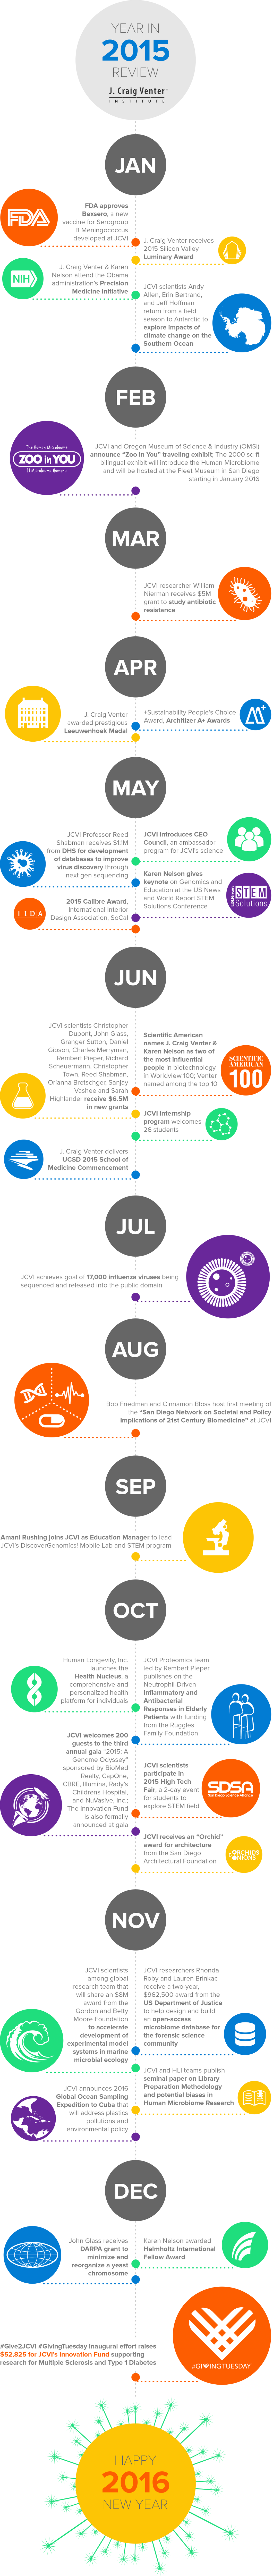 jcvi-timeline-2015